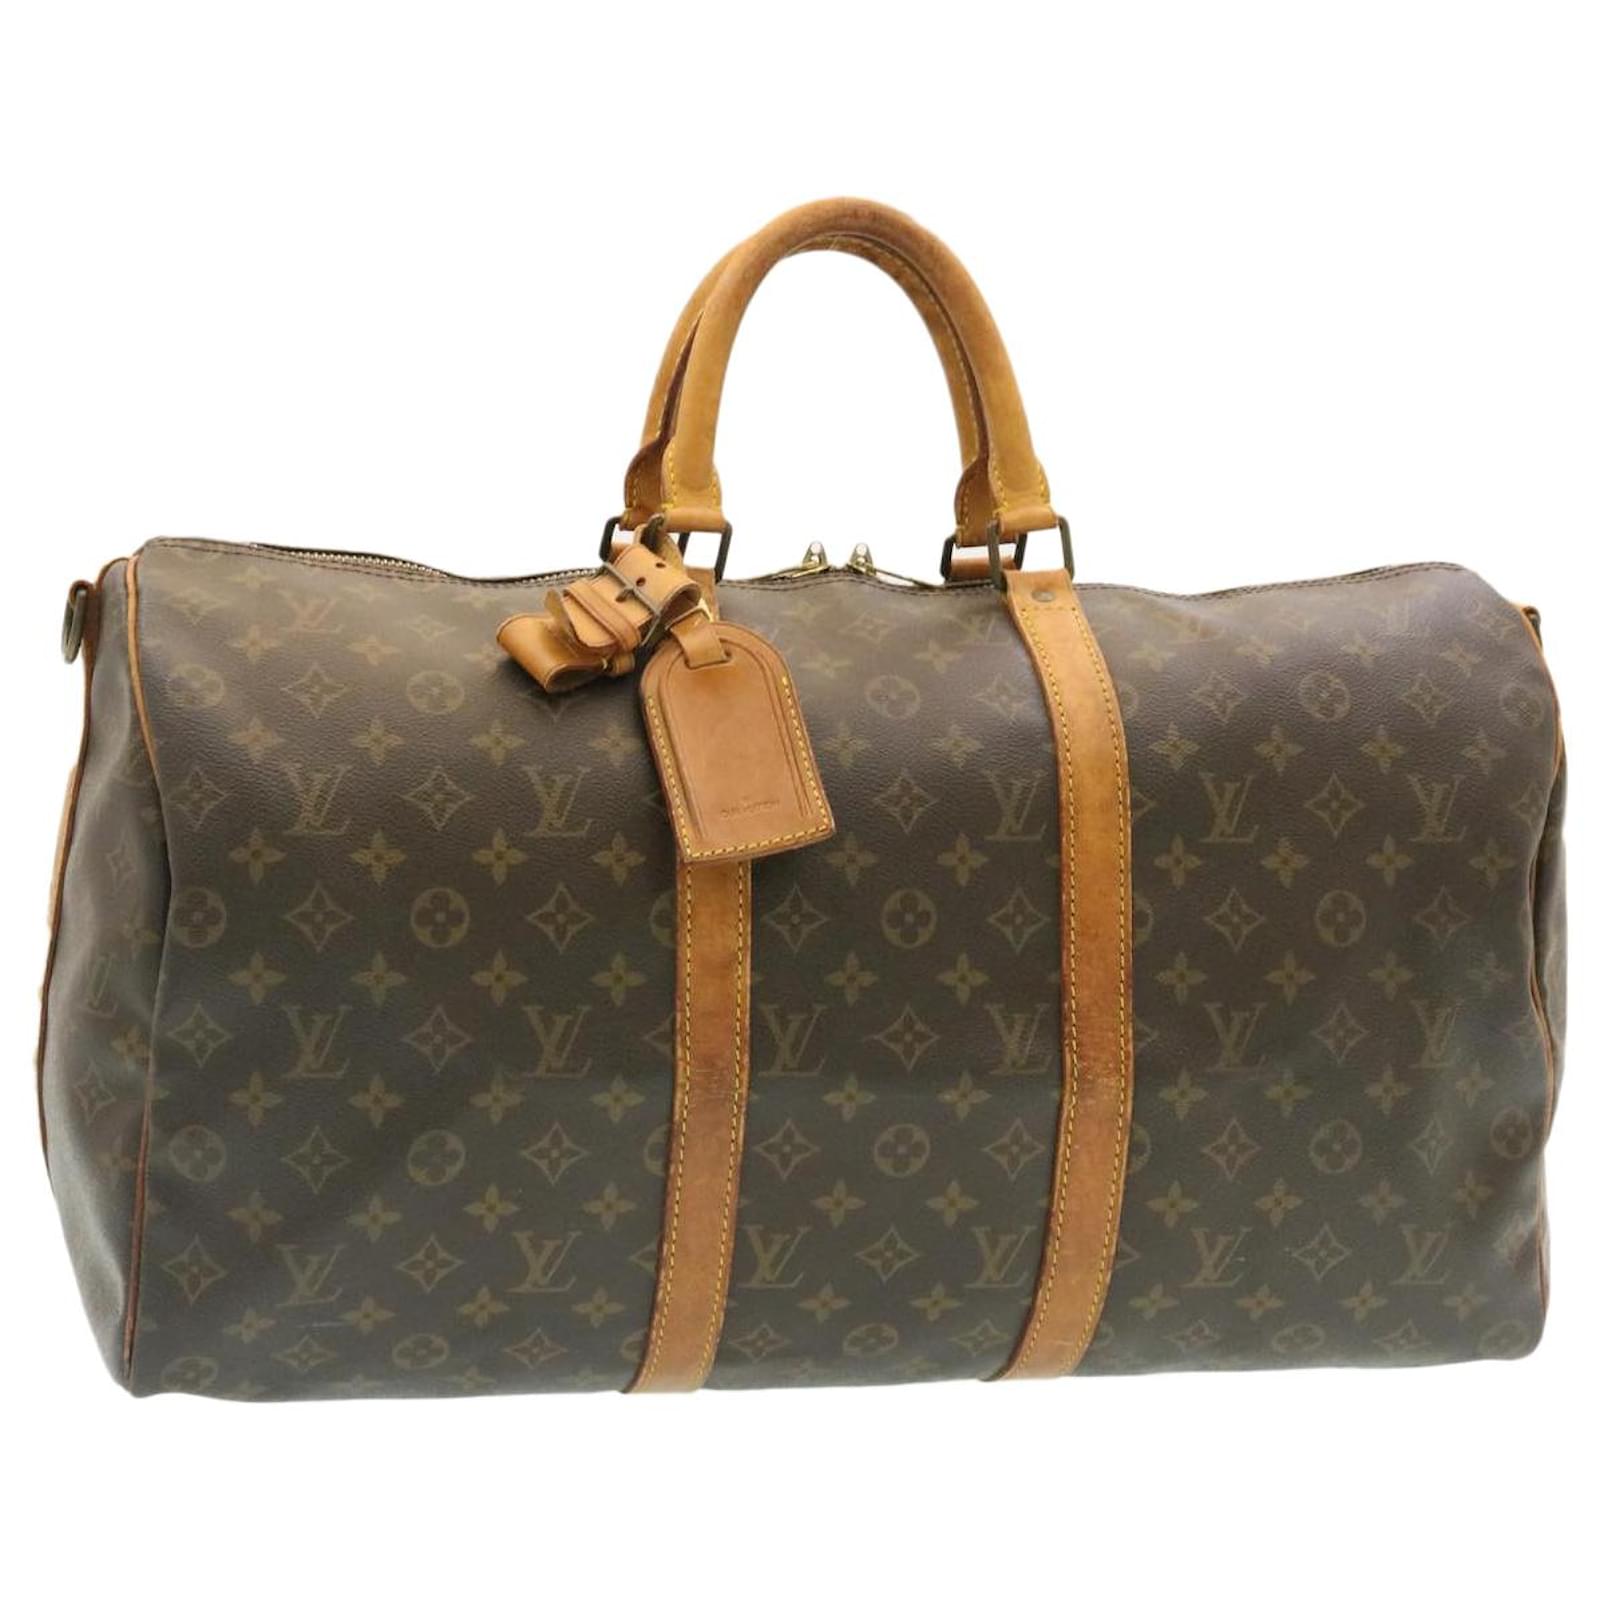 Louis Vuitton KeepallBandouliere 50 Bostonbag